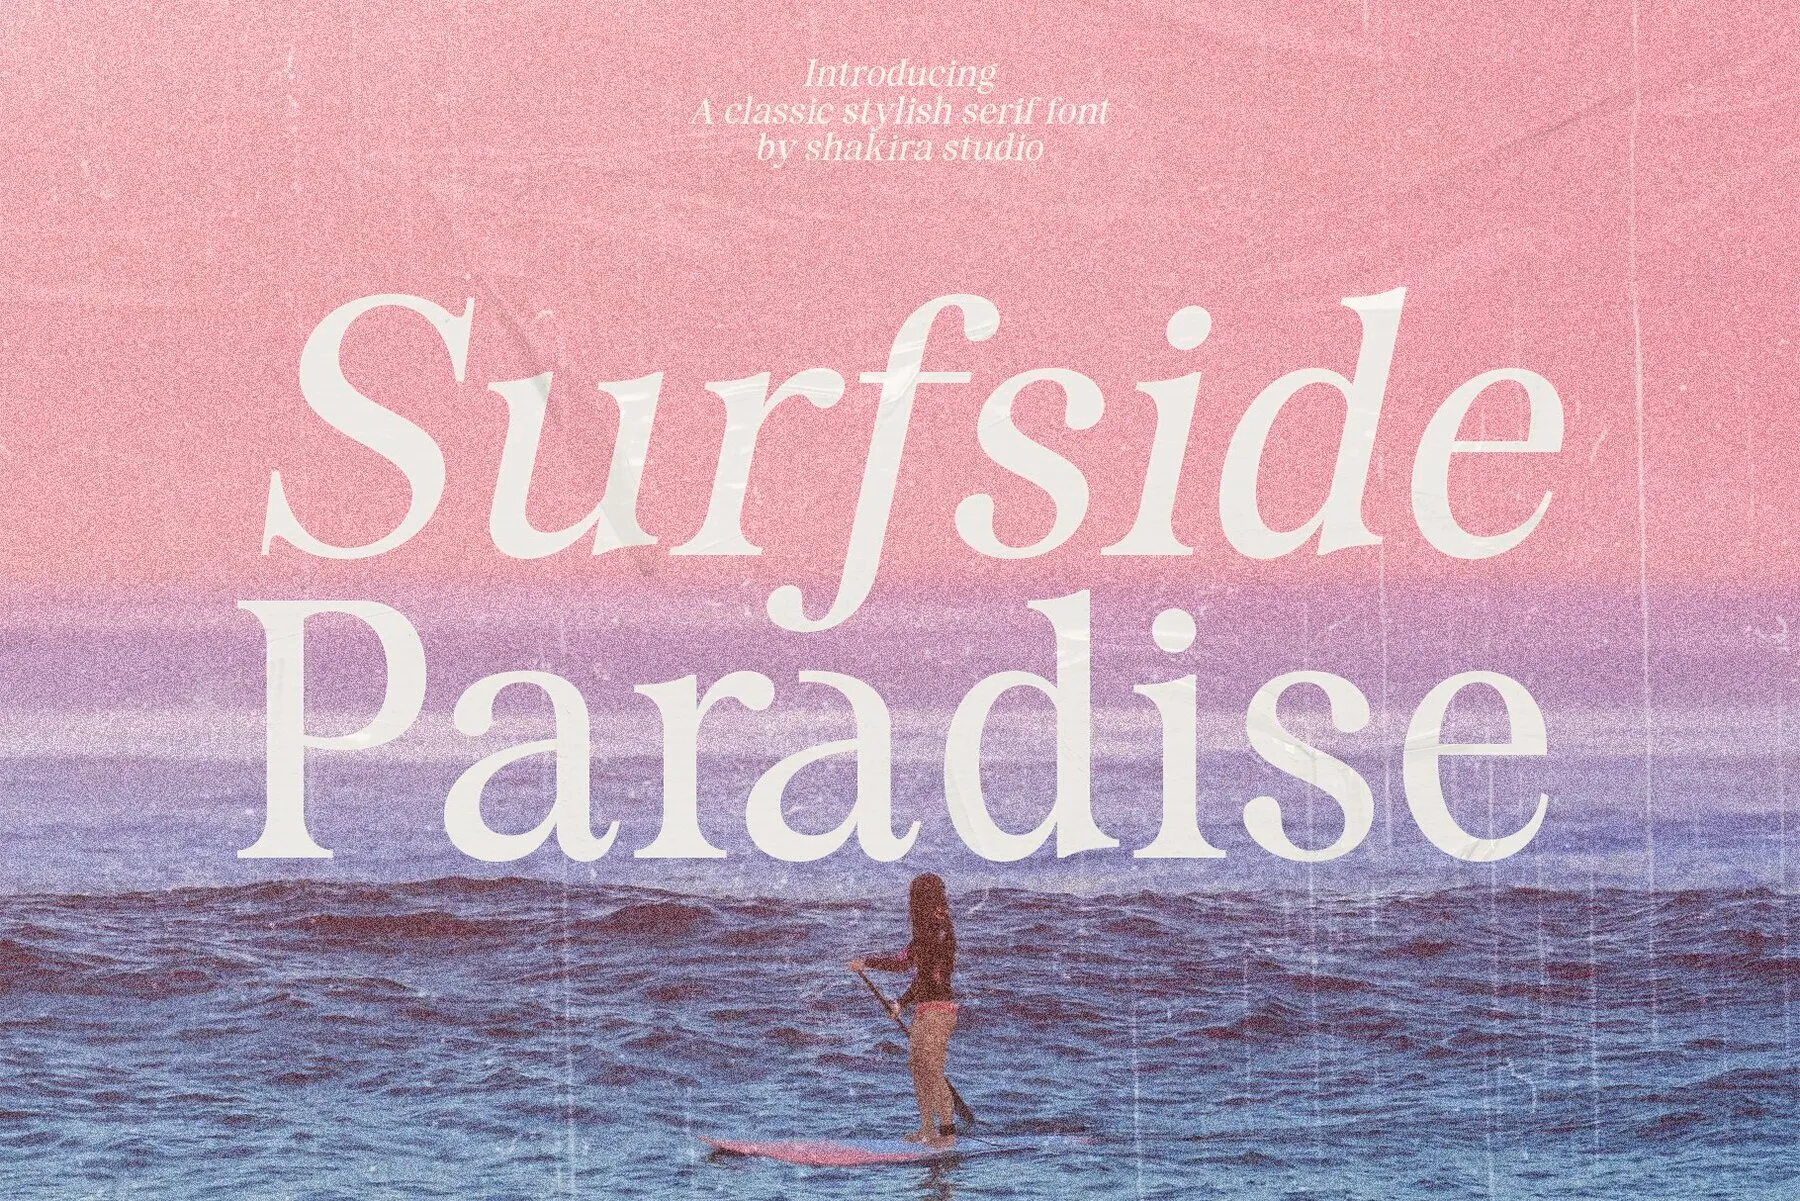 Surfside Paradise